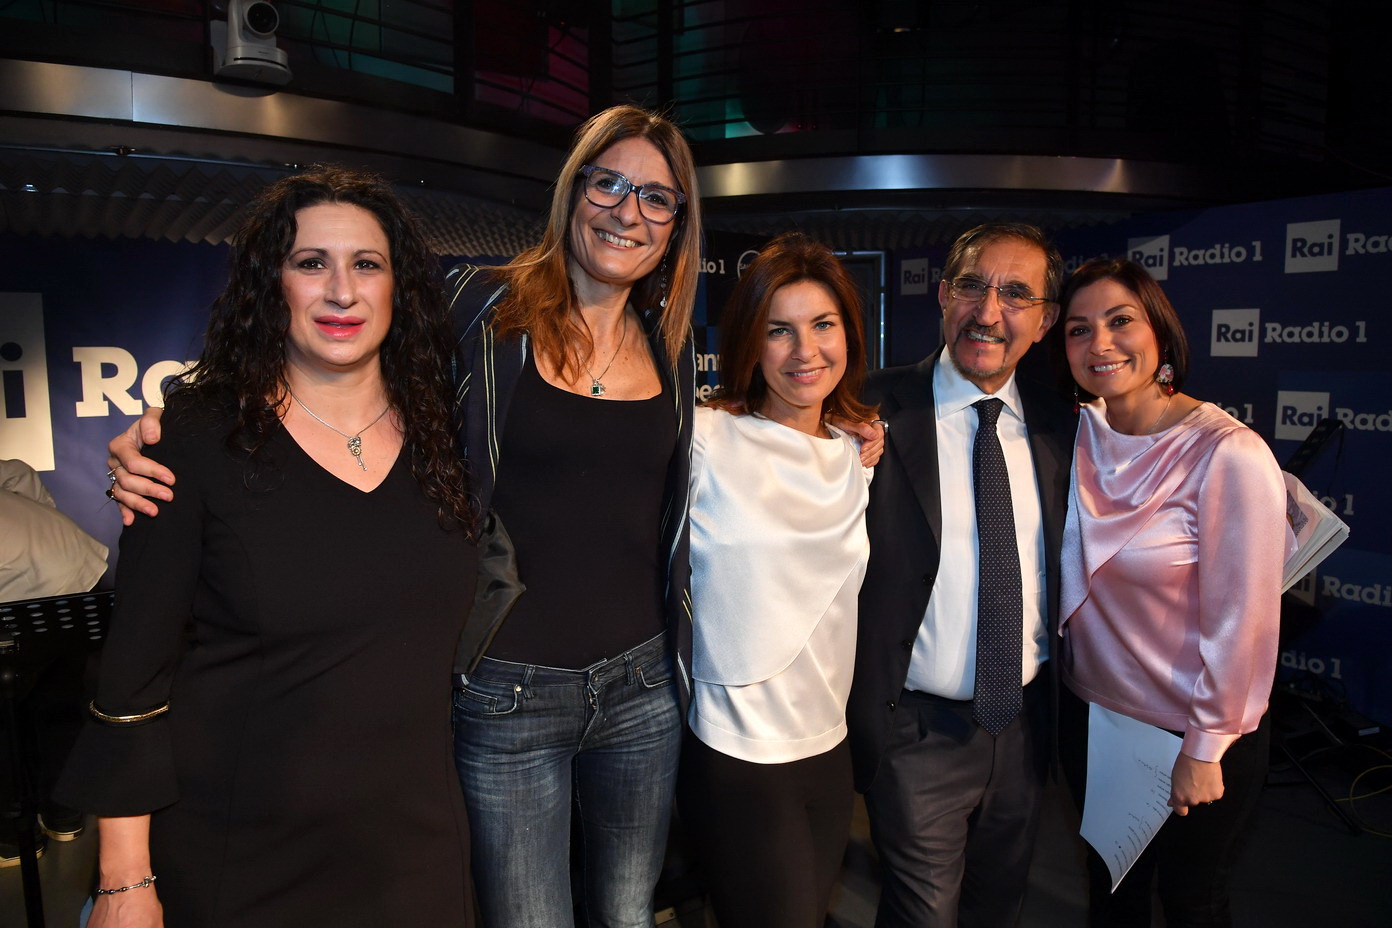 Teresa Brugellis, Simona Malpezzi, Alessia Morani, Ignazio La Russa, Alessandra Moretti